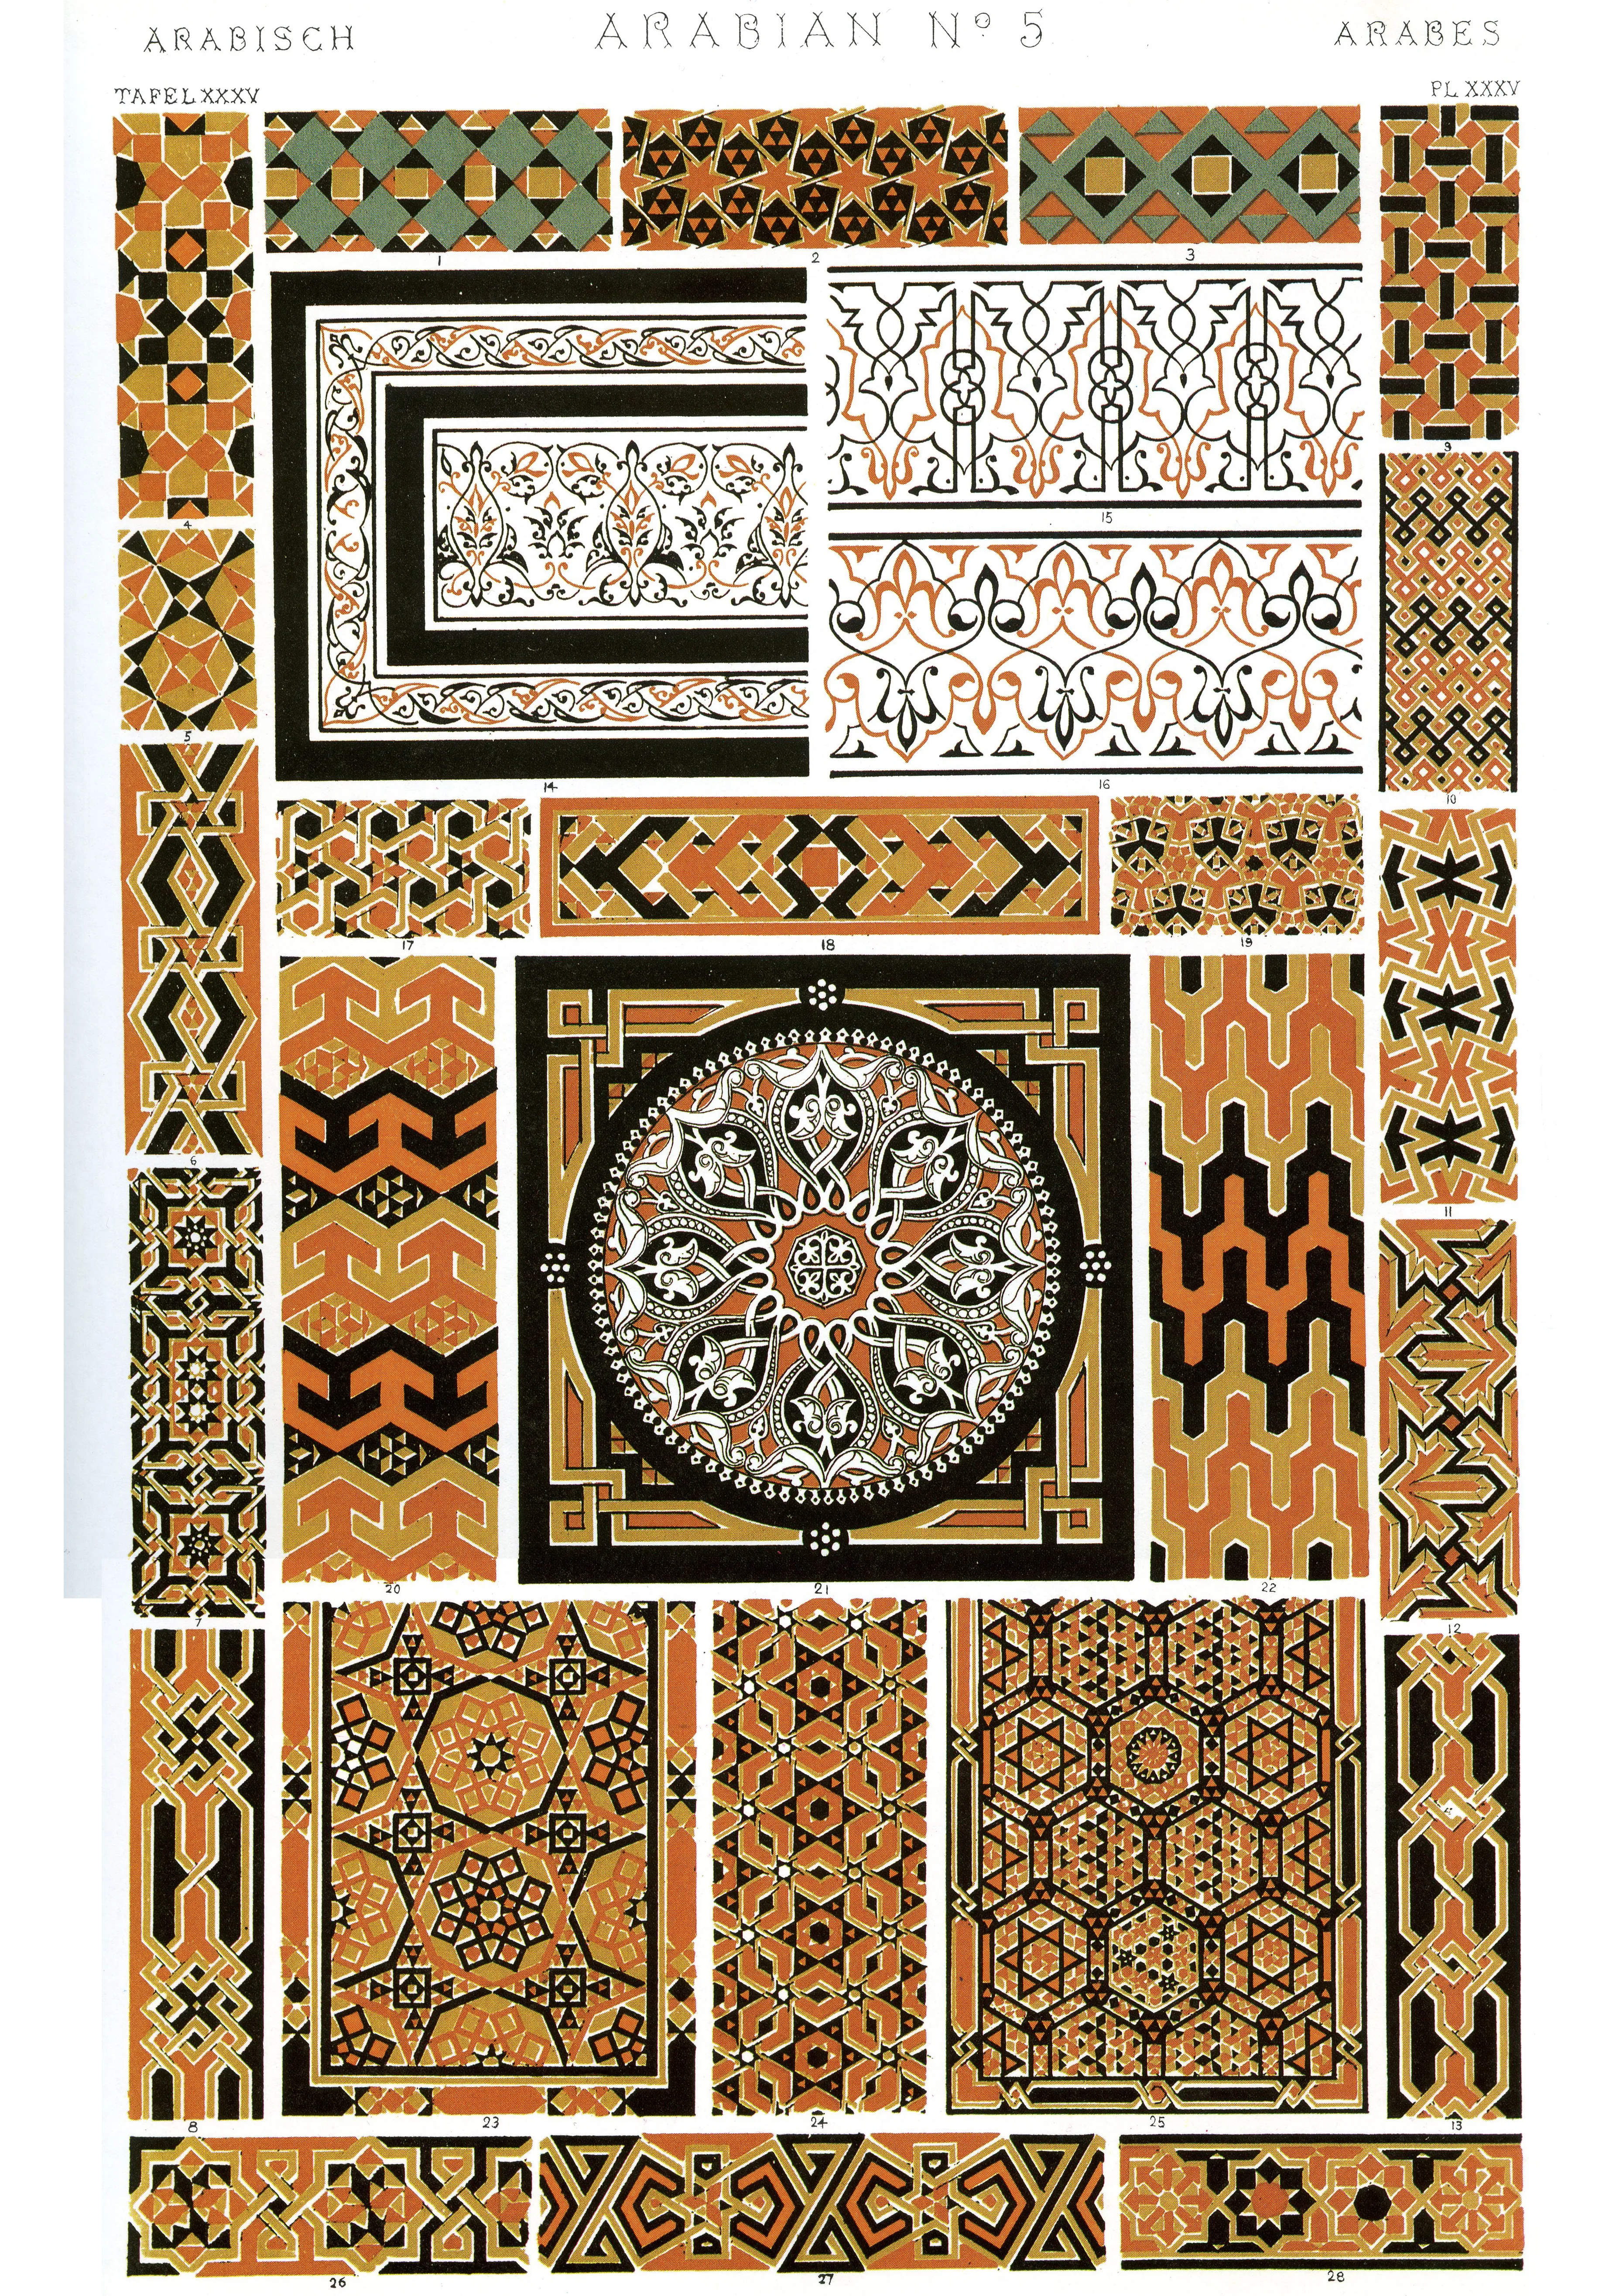 Оуэн Джонс грамматика орнамента» (1856